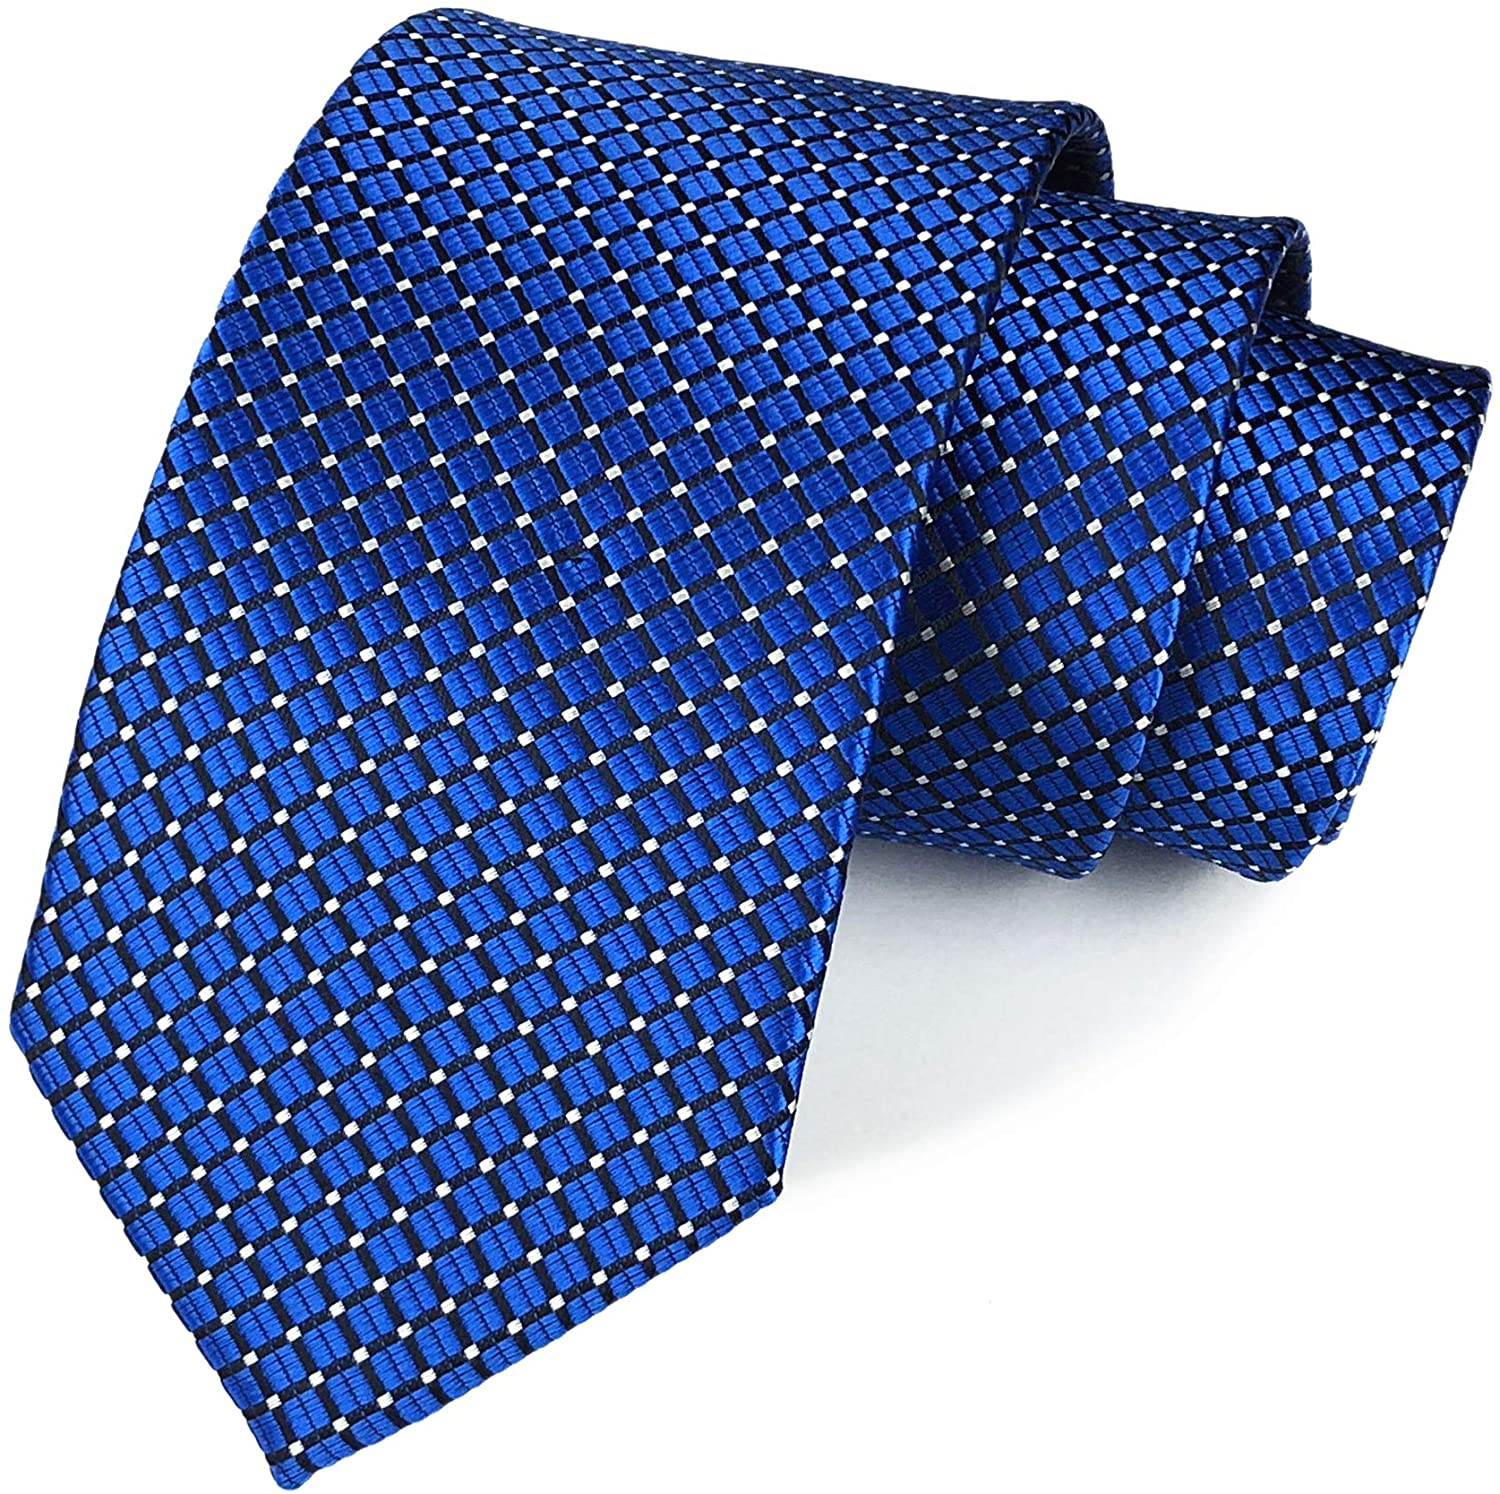 Secdtie Mens Classic Checks Dark Blue Grey Jacquard Woven Silk Tie Necktie